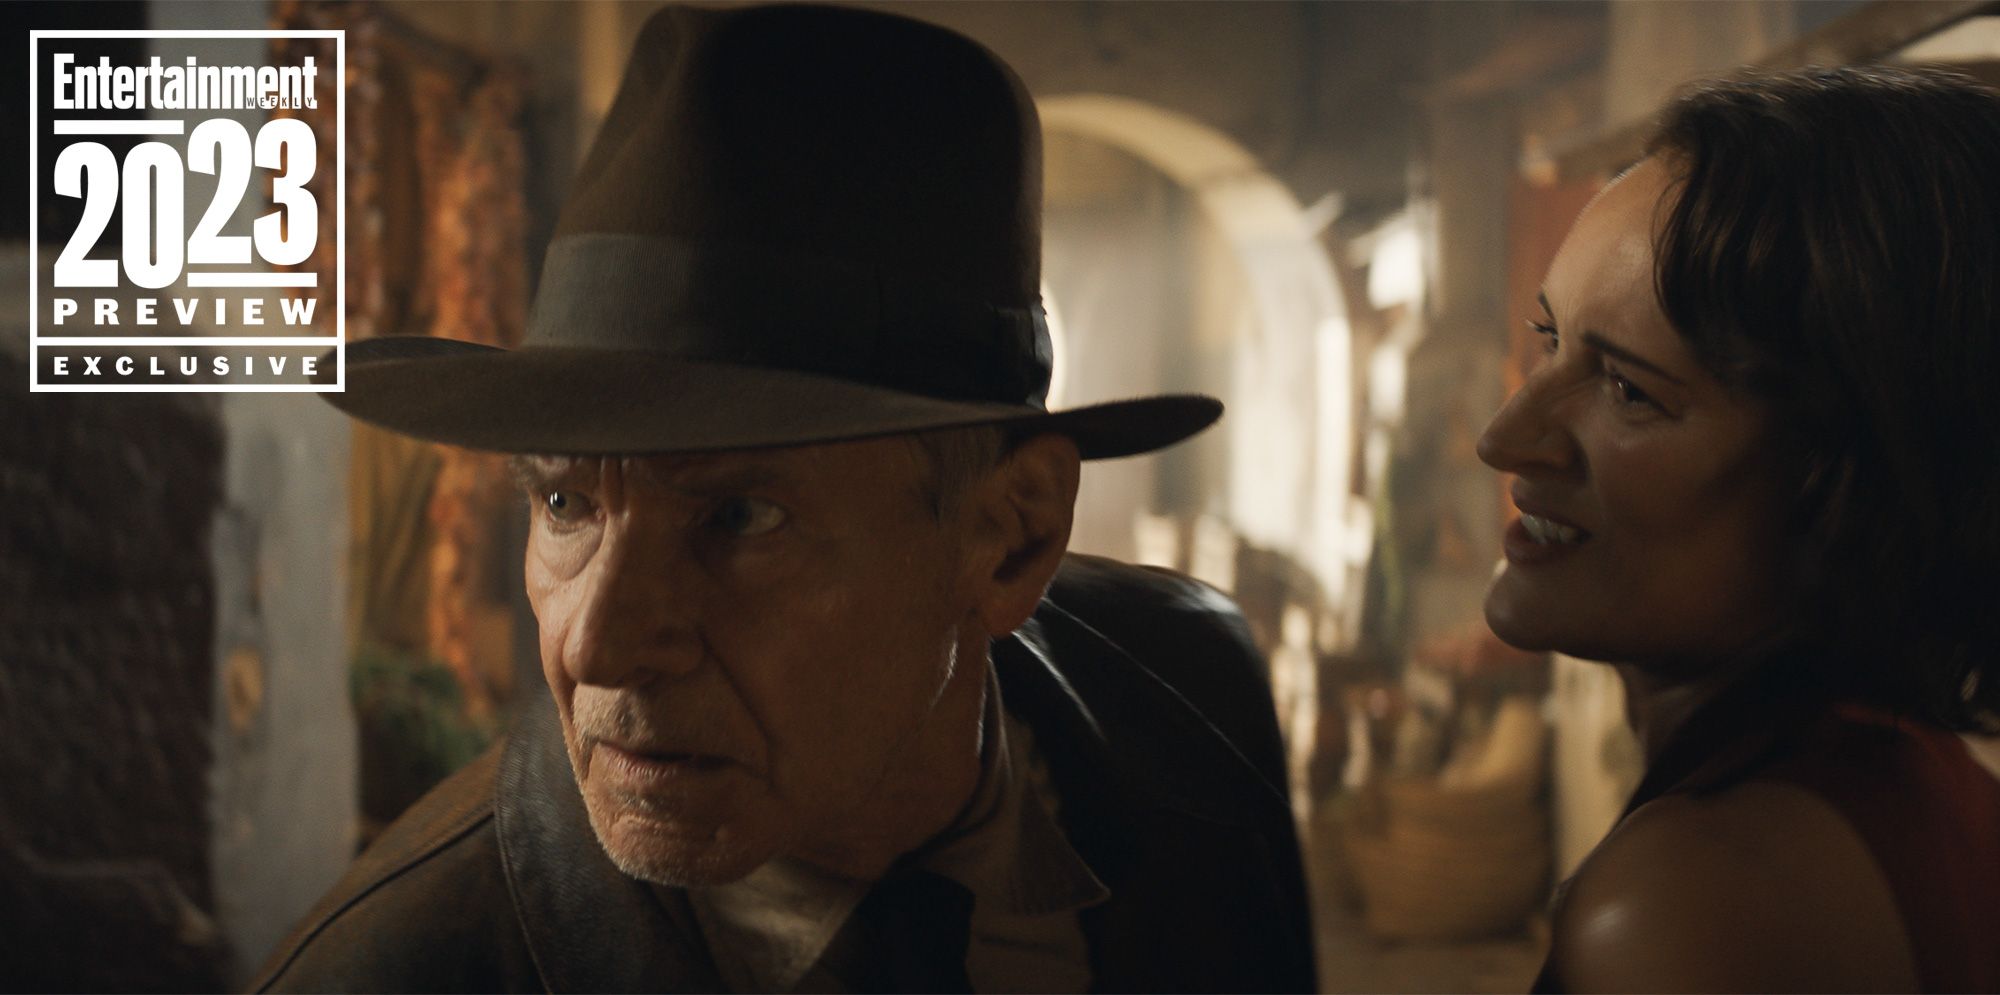 Indiana Jones 5 Image & Director Tease Phoebe Waller-Bridge's Role